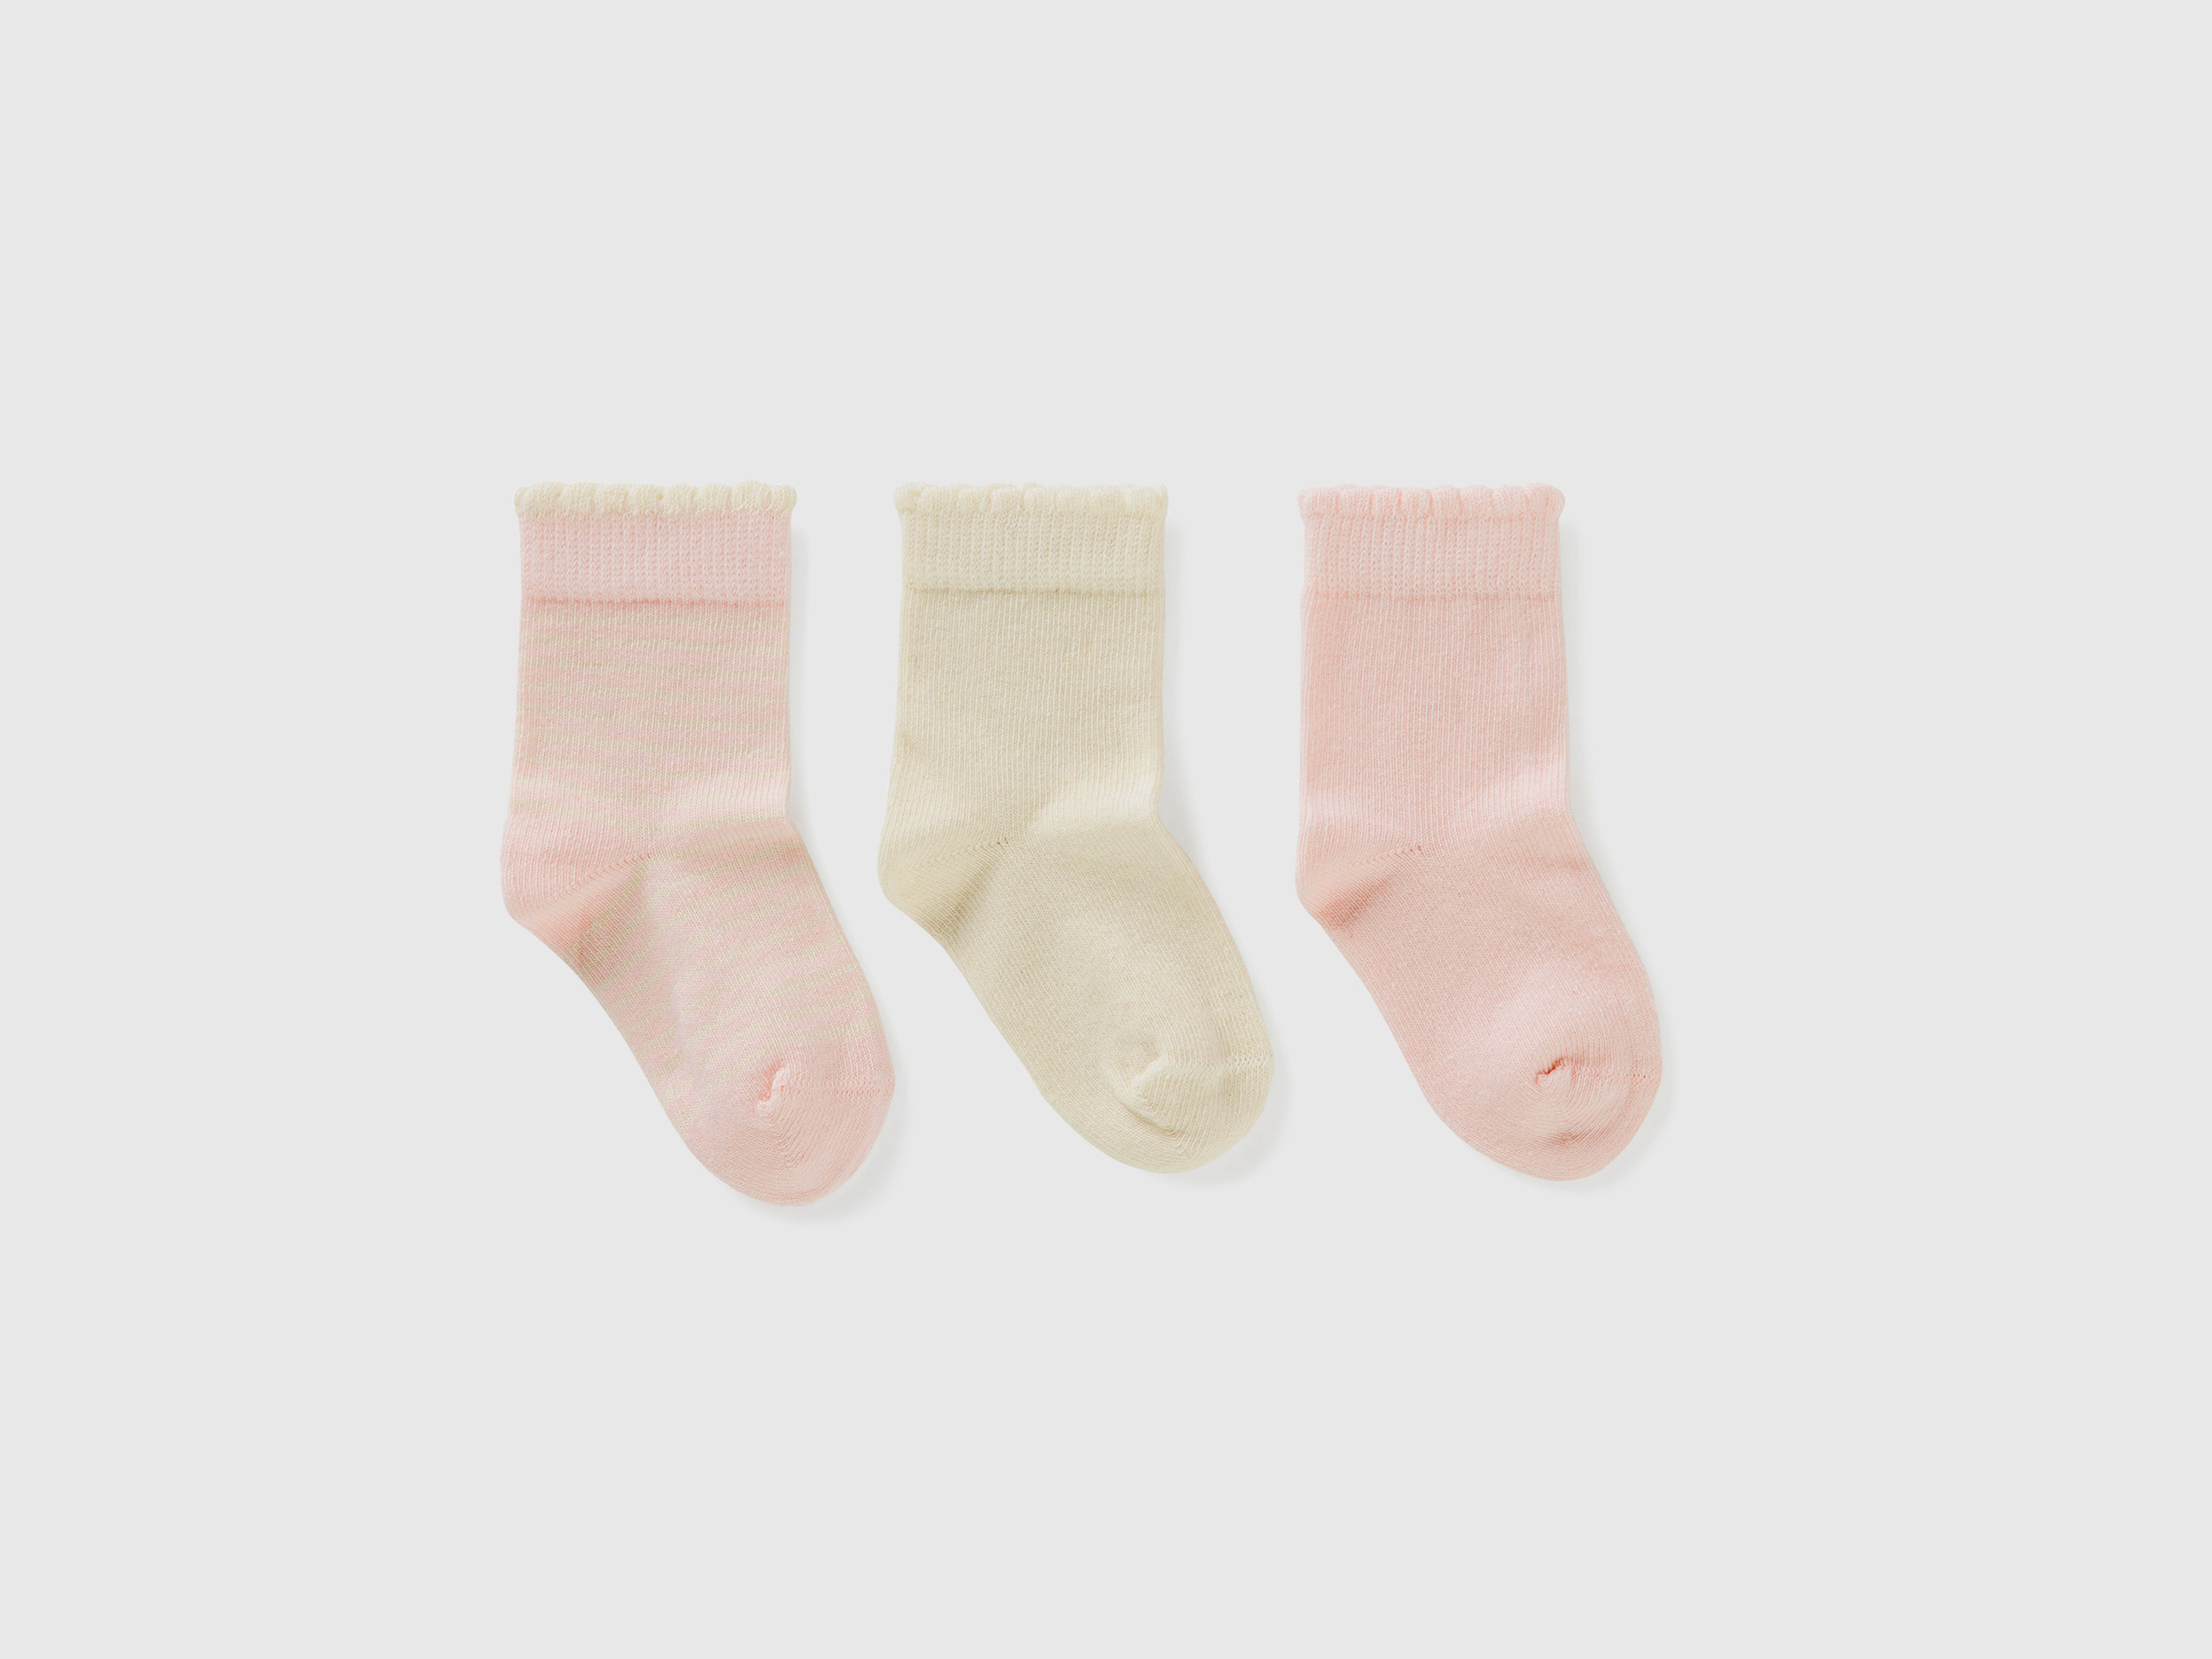 Benetton, Sock Set In Pink Tones, size 6-12, Multi-color, Kids